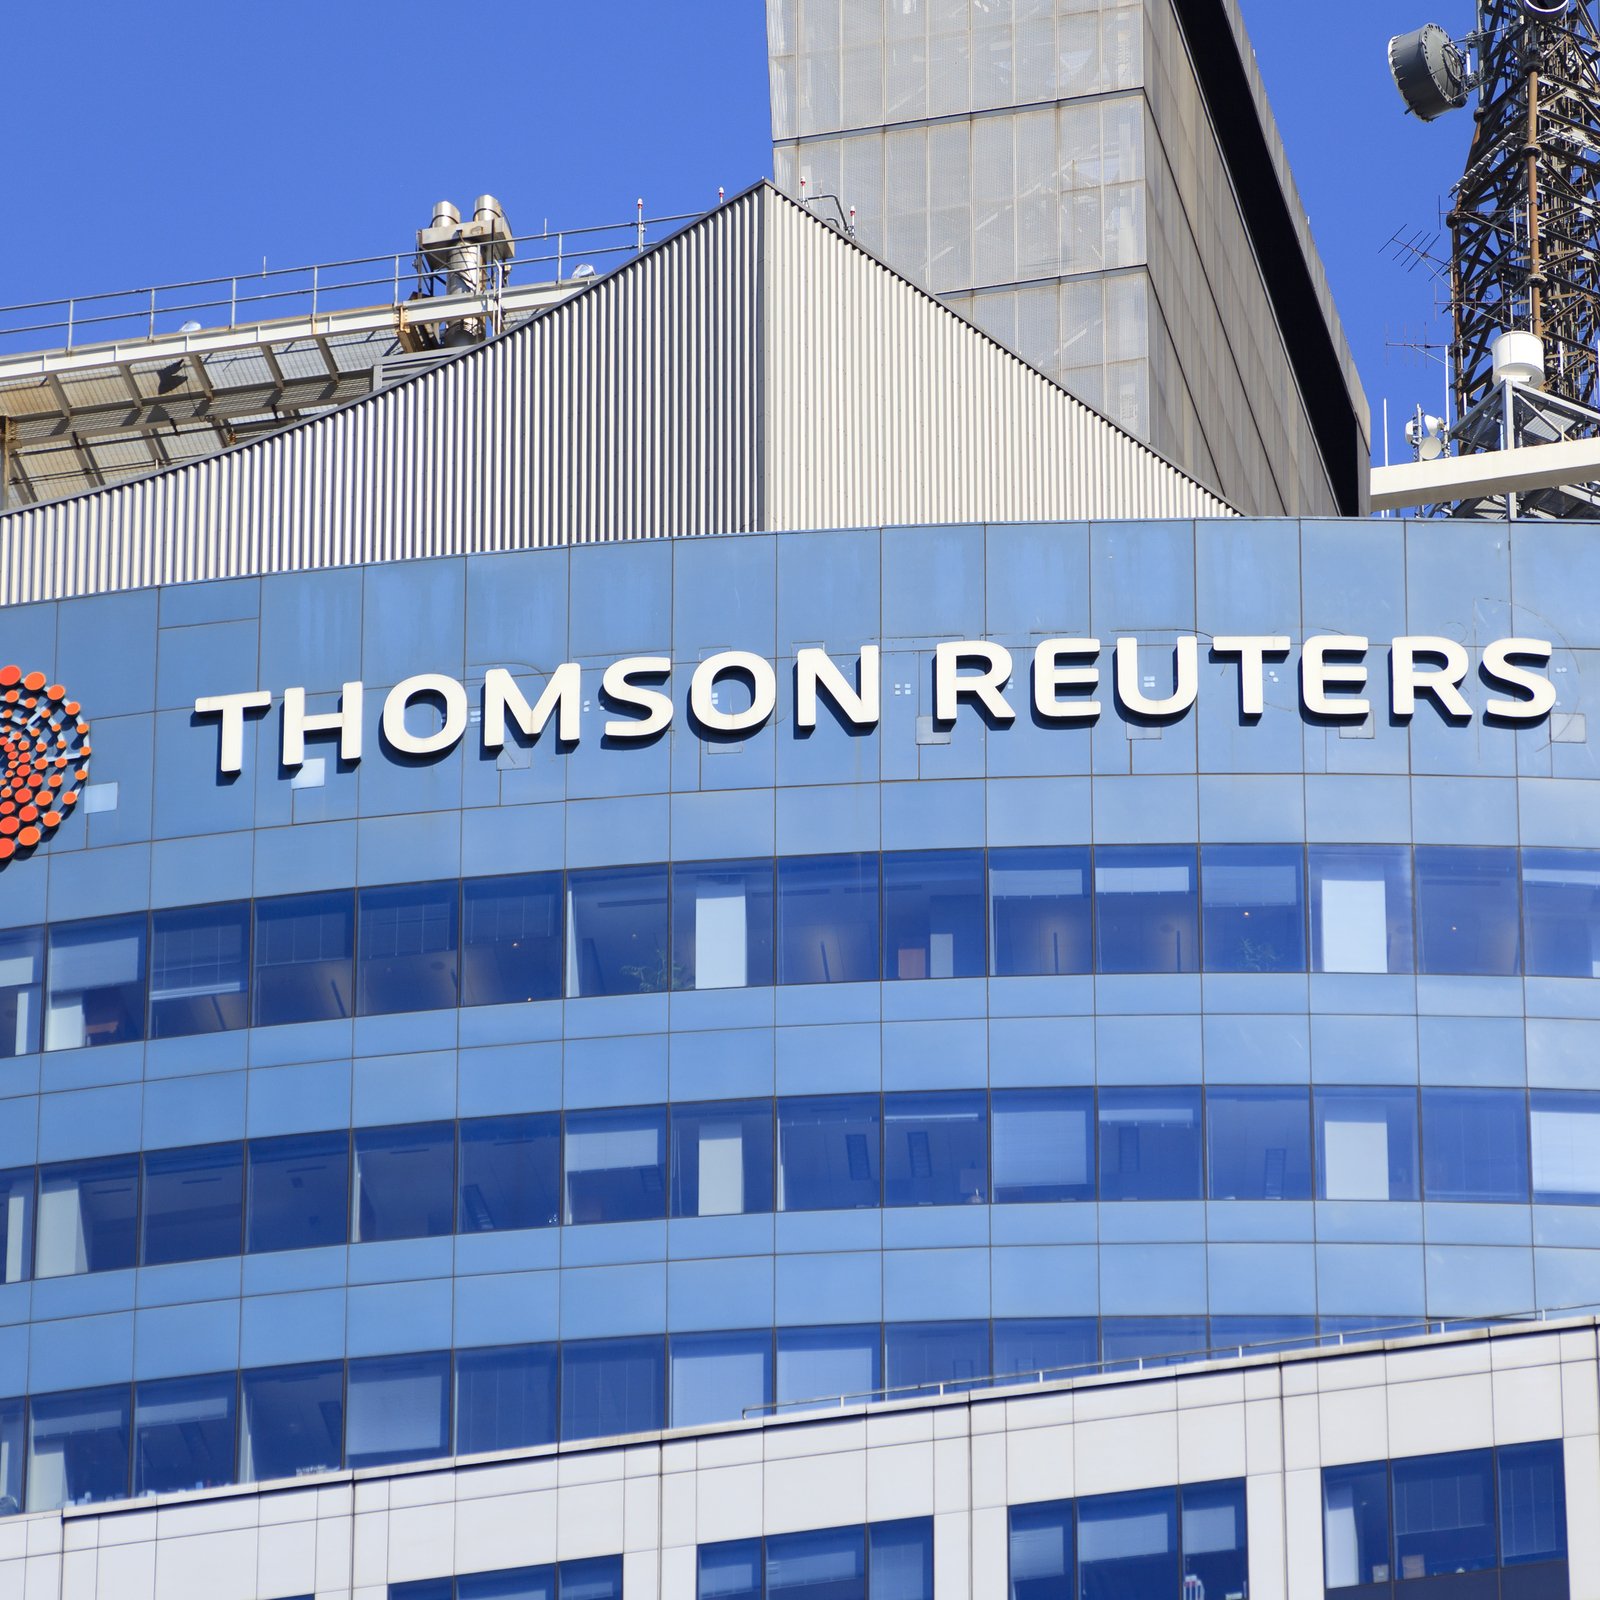 Thomson Reuters Adds Bitcoin Cash to Eikon Platform